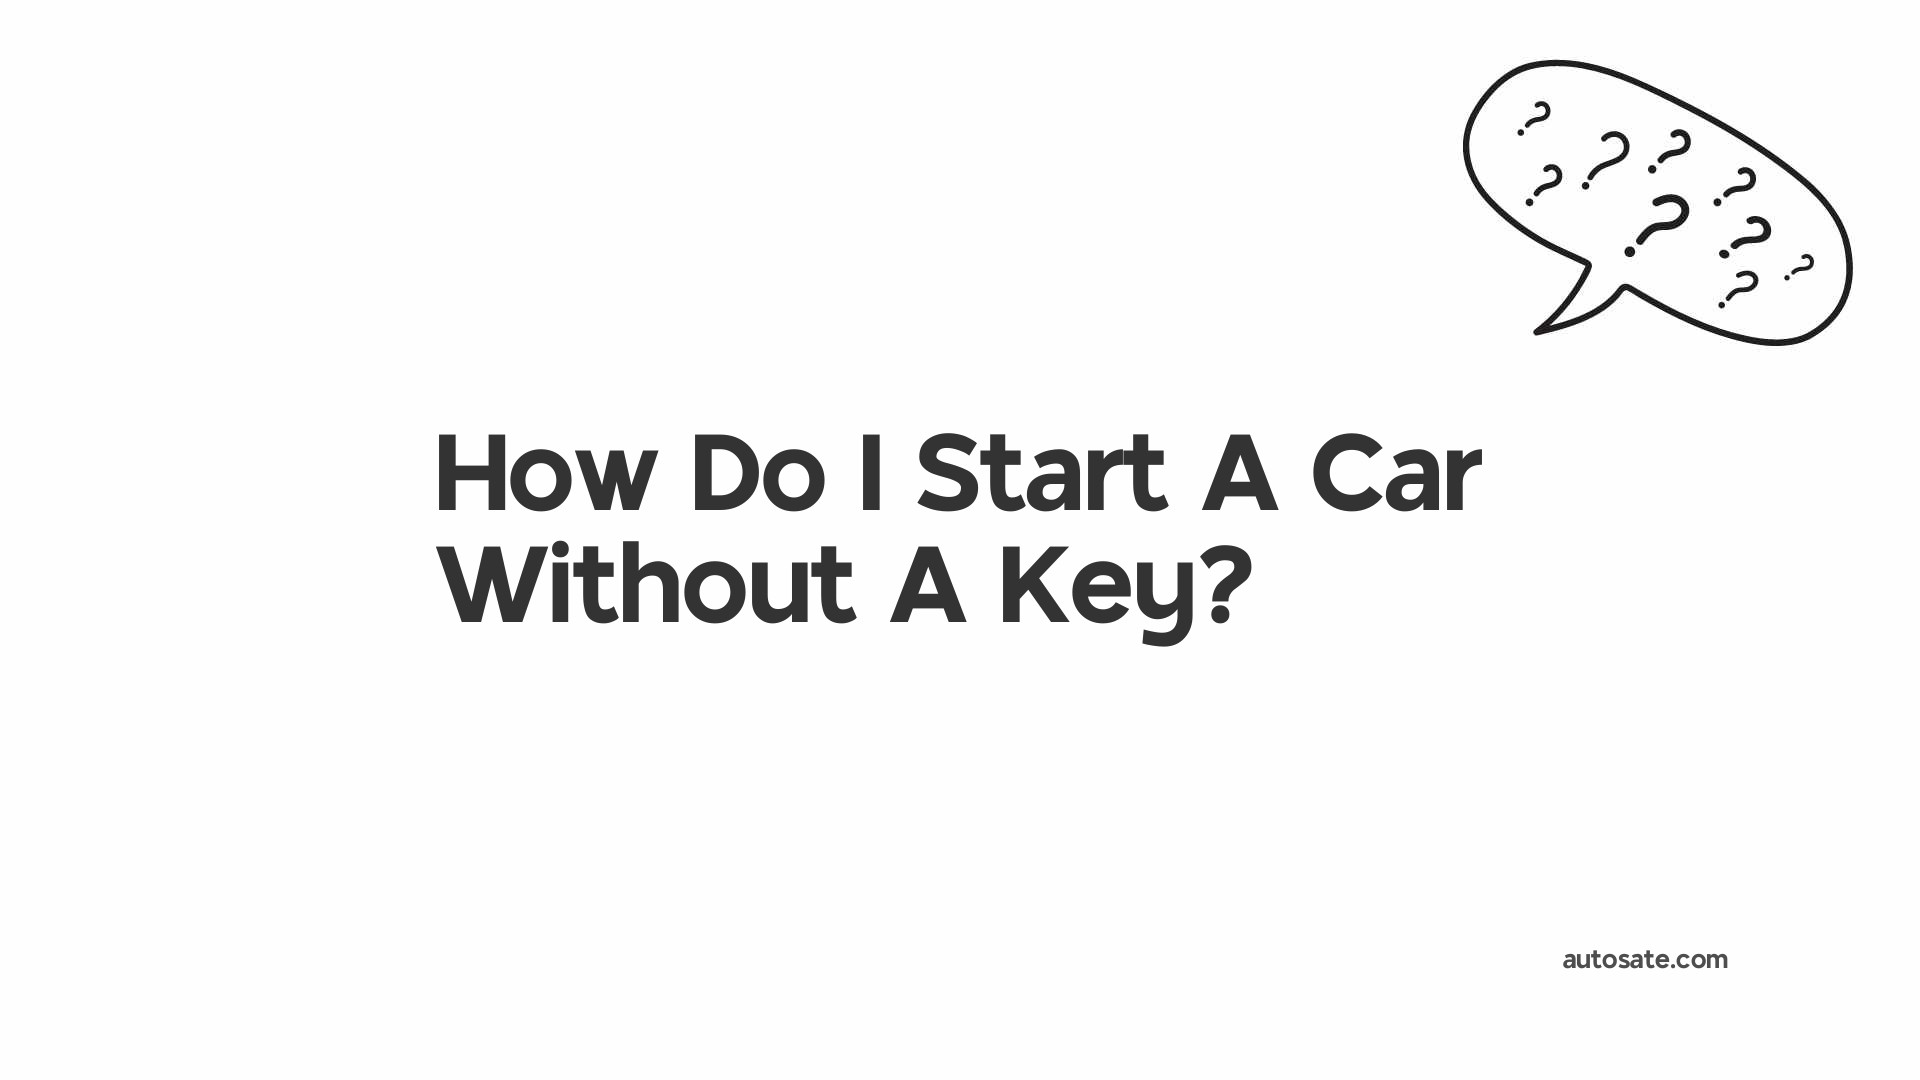 How Do I Start A Car Without A Key?